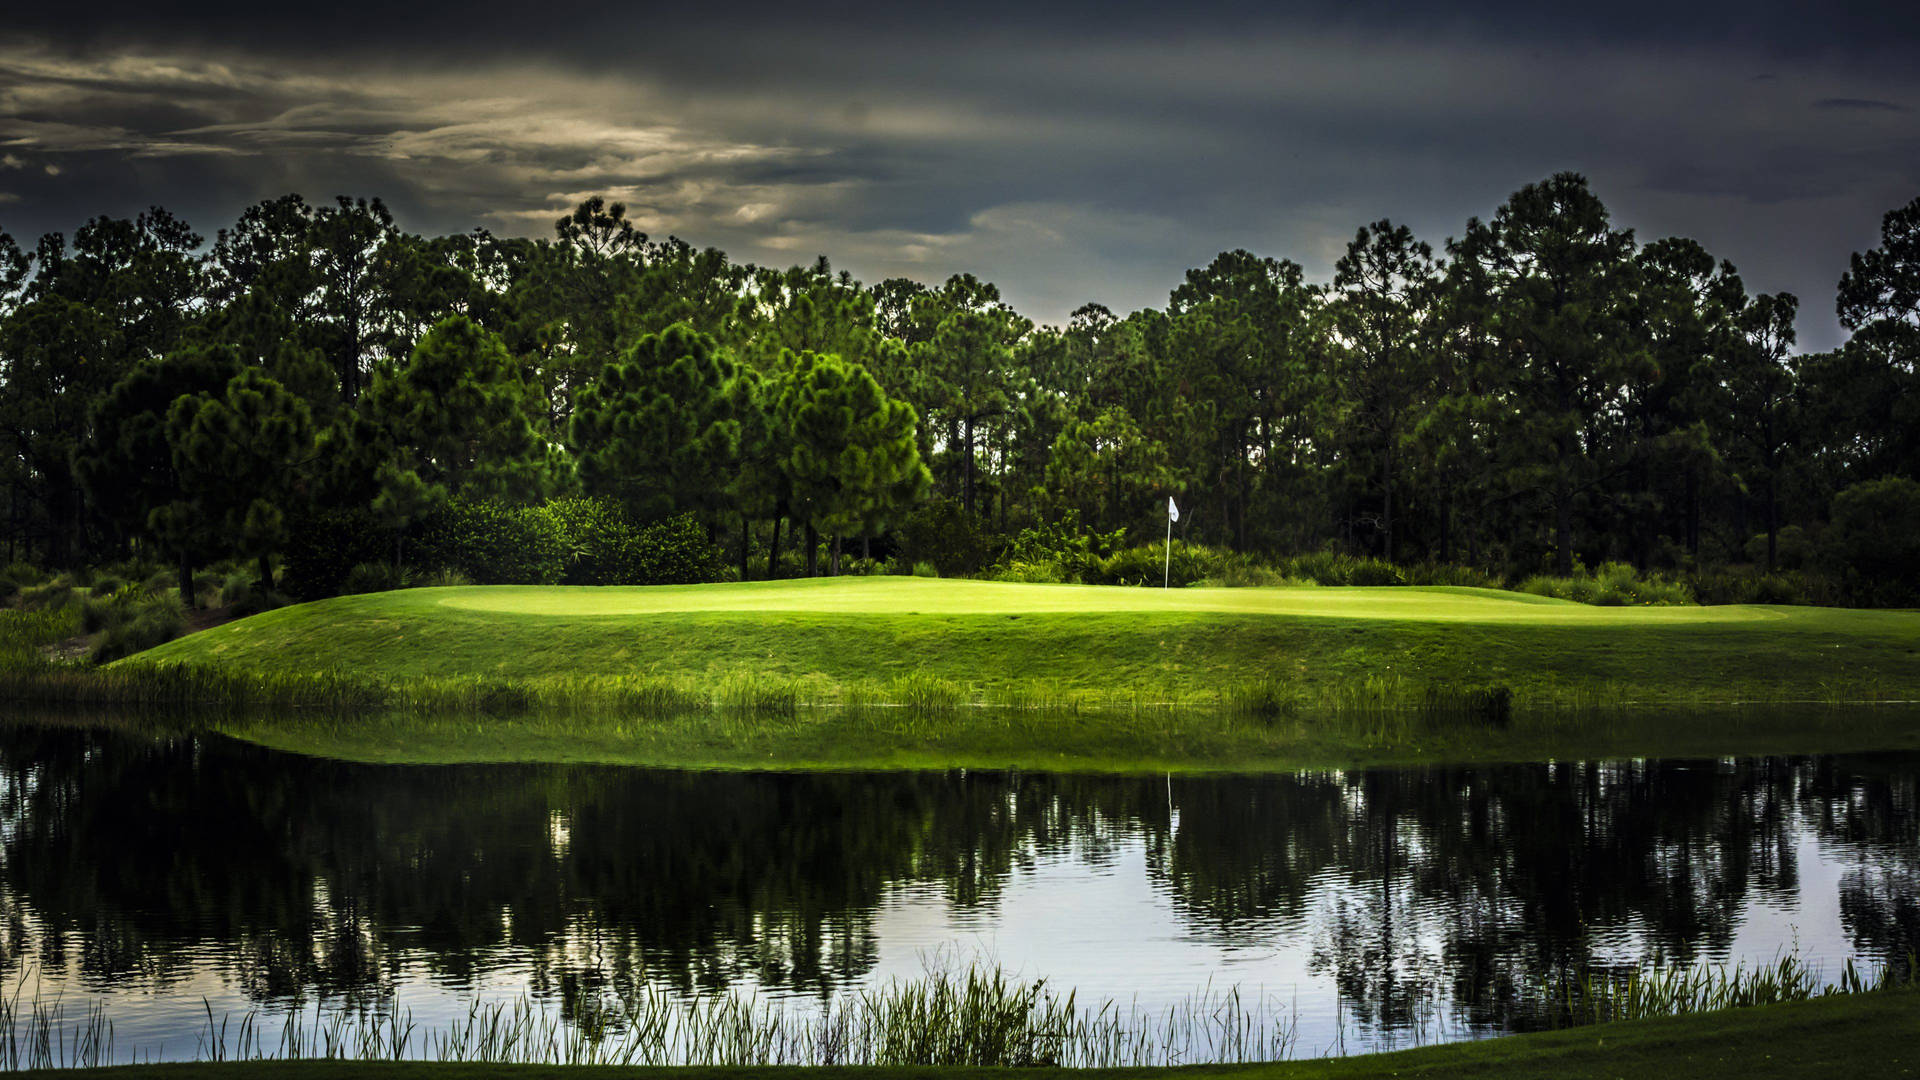 4k Golf Course Gloomy Day Background